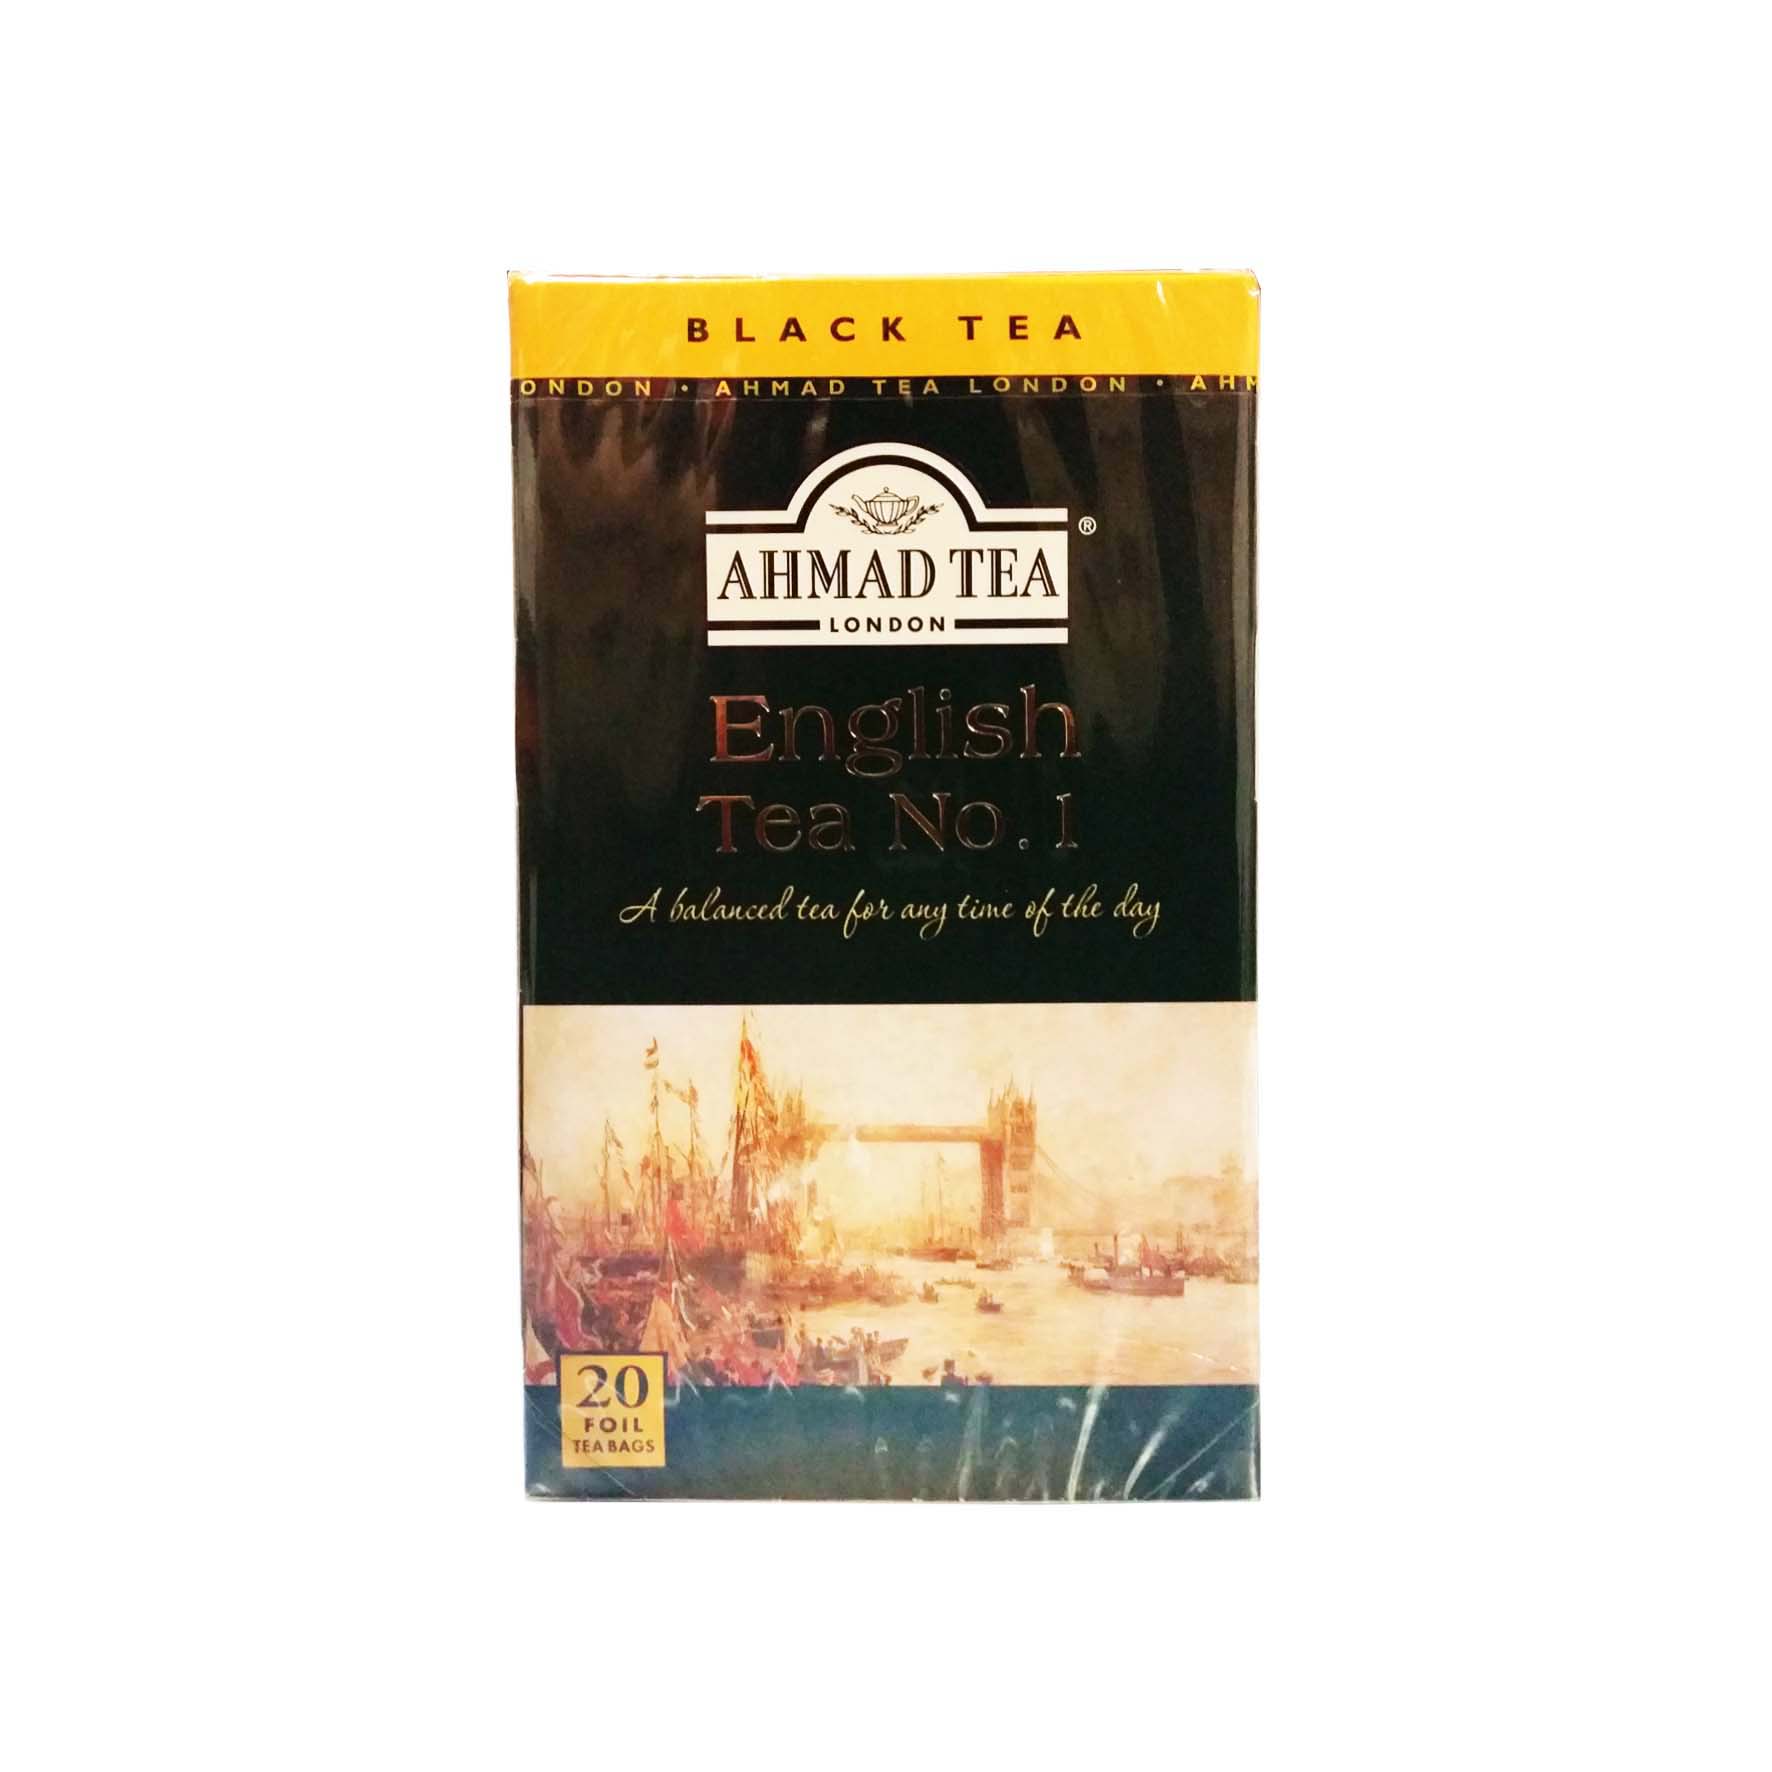 Ahmad te english tea no.1 6x20